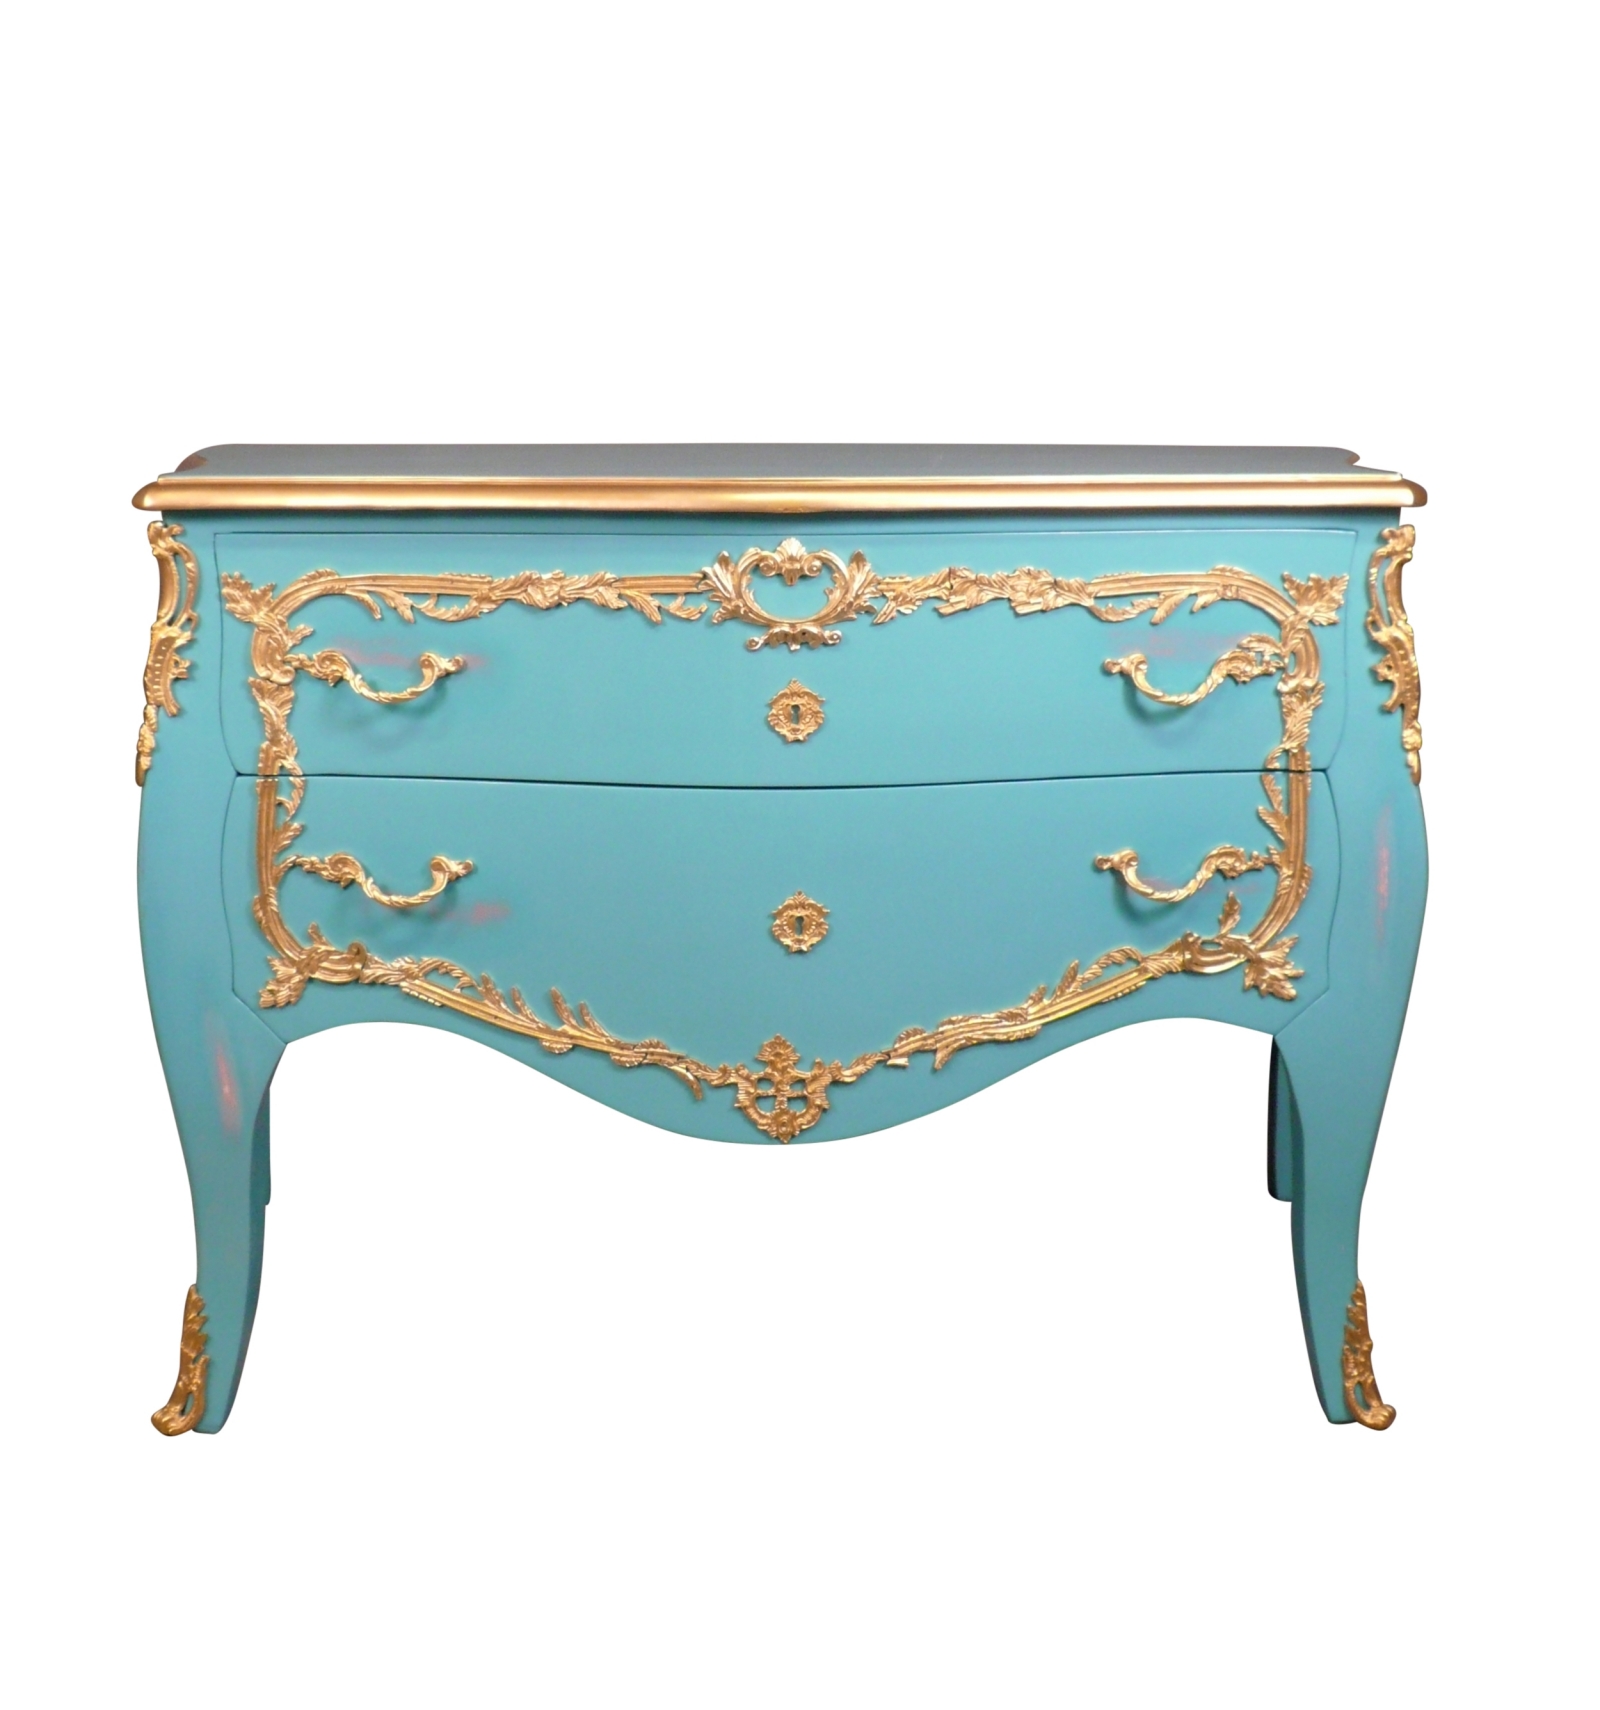 Grote blauwe ladekast - Barok meubilair in stijl